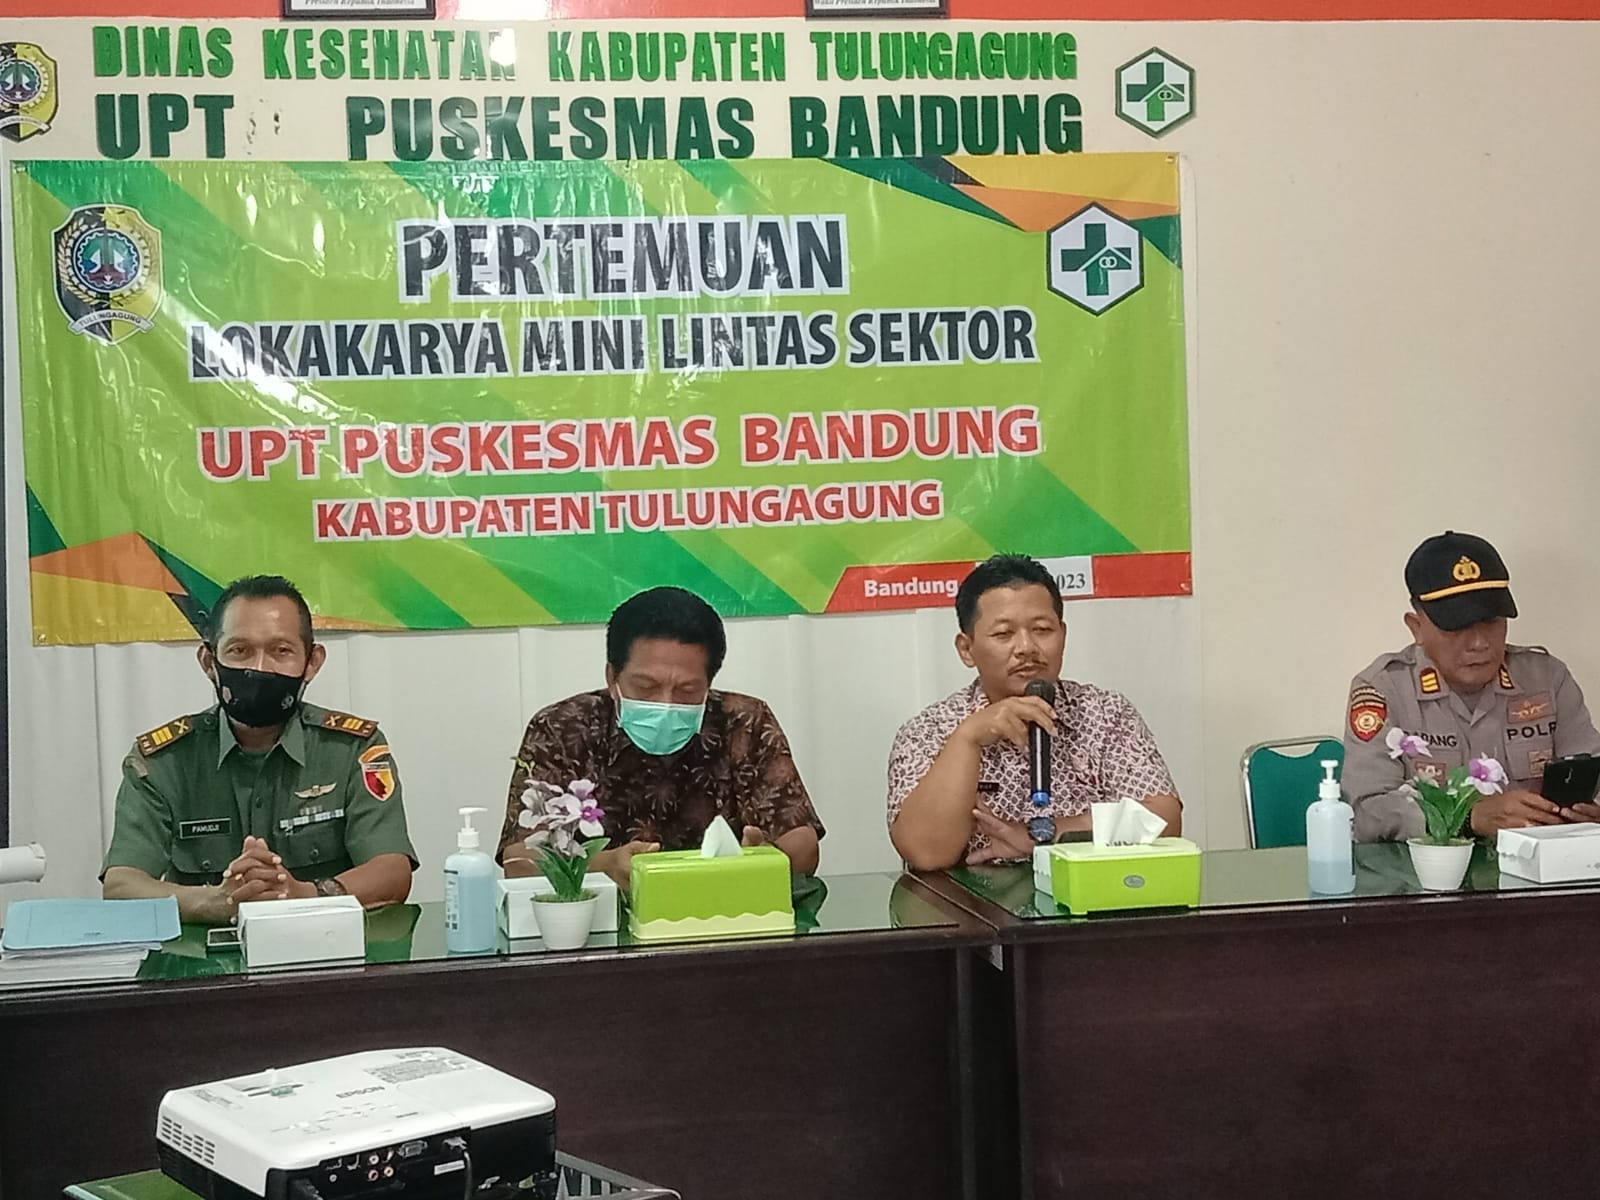 UPT Puskesmas Bandung Kabupaten Tulungagung Gelar Loka Karya Mini Lintas Sektor Bersama FORKOPIMCAM